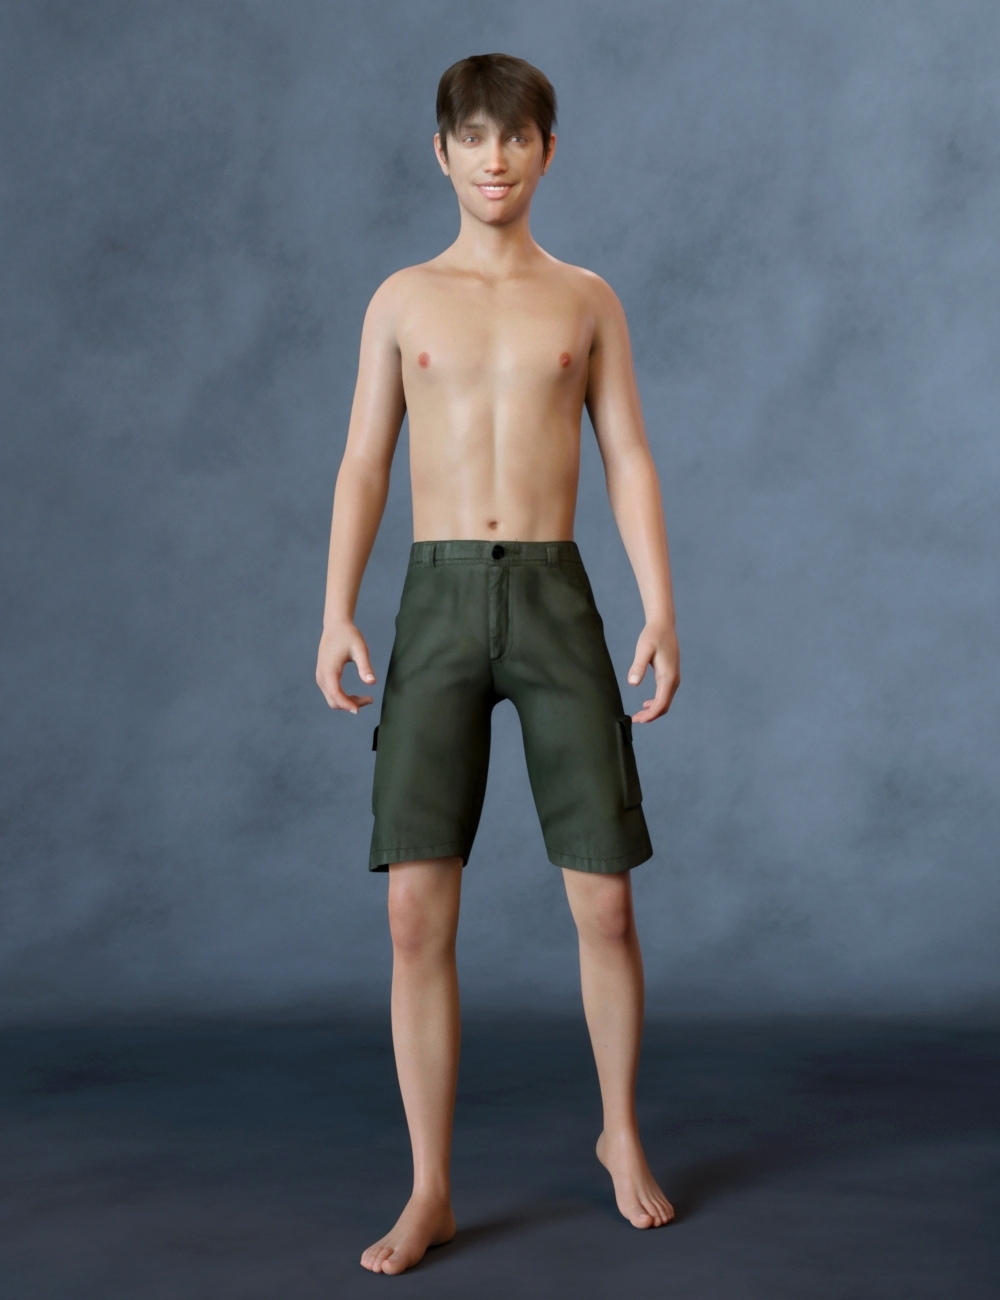 Trevor for Genesis 8 Male by: SF-Design, 3D Models by Daz 3D